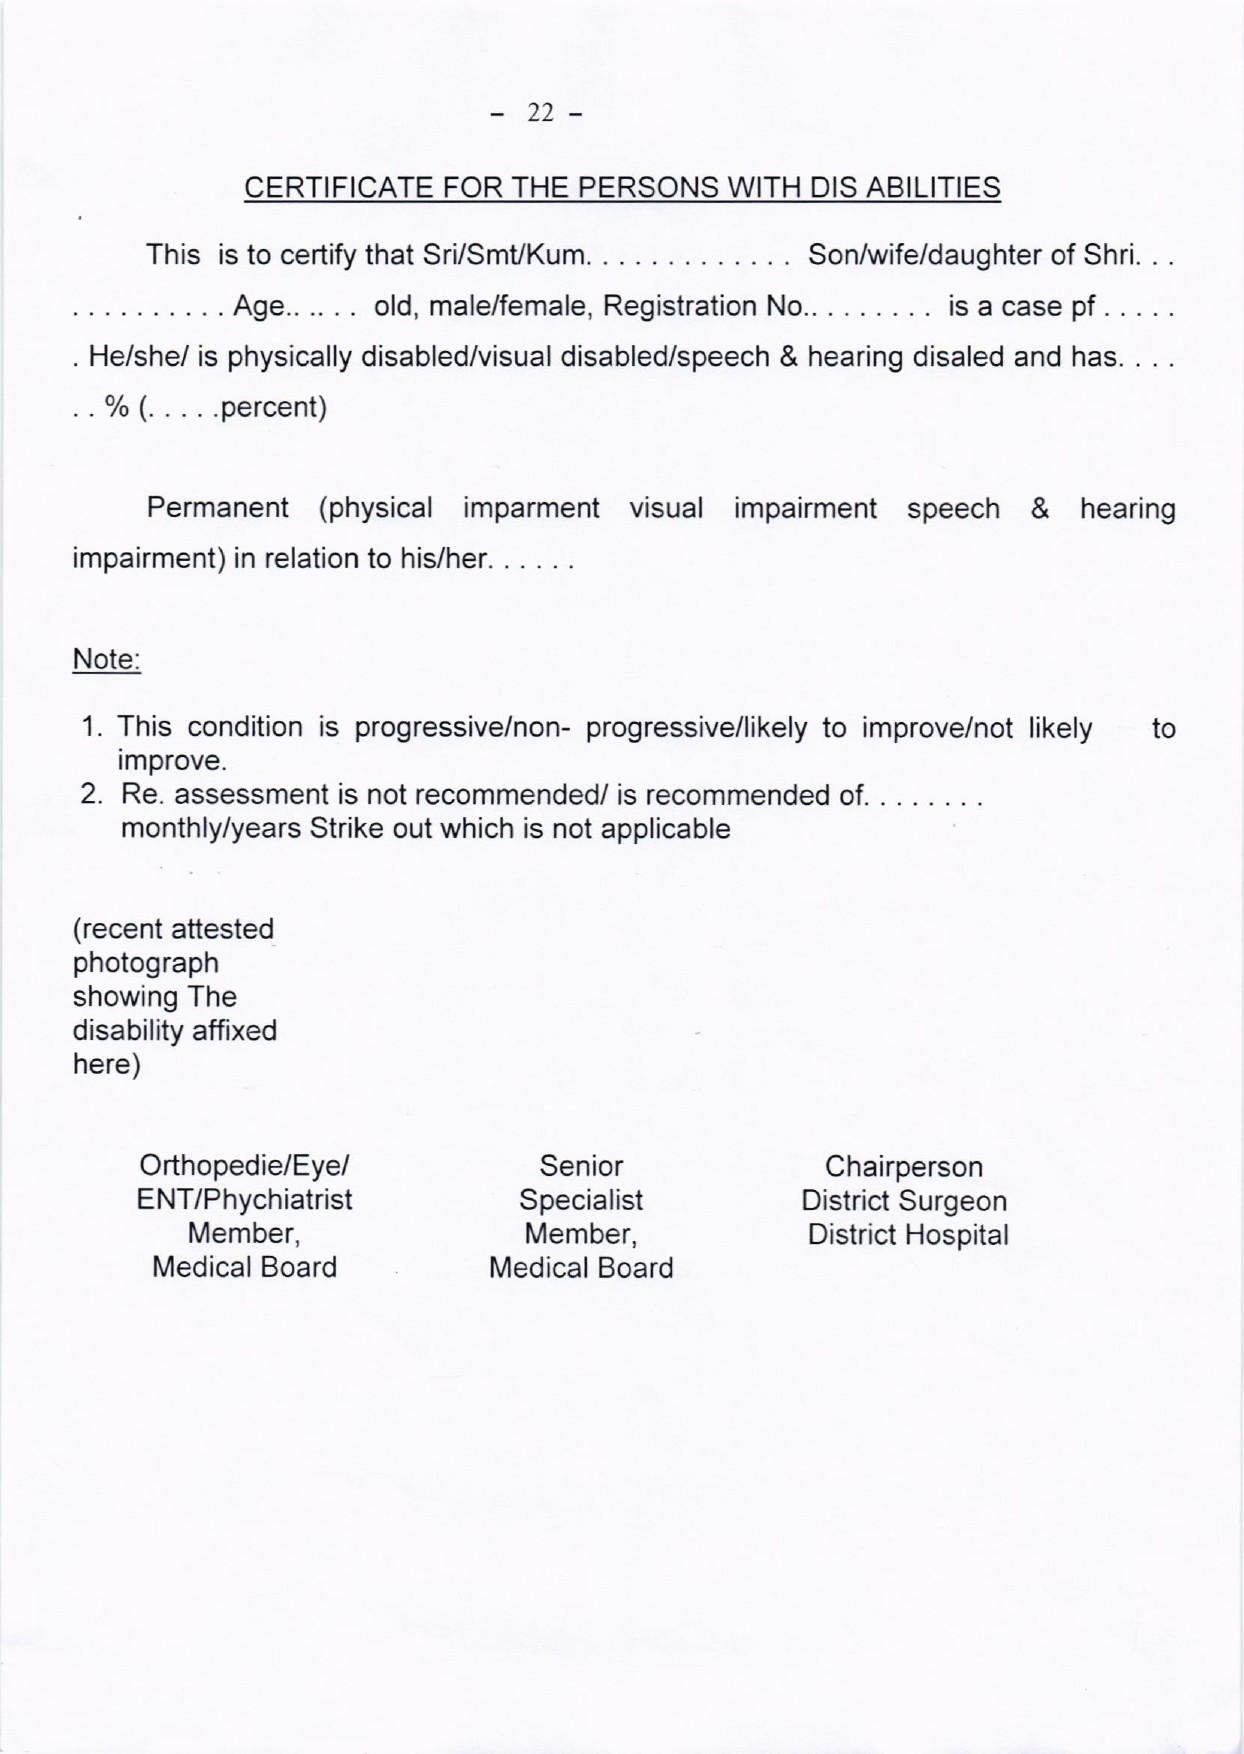 KSCCF Recruitment 2021 - Notification Image 22